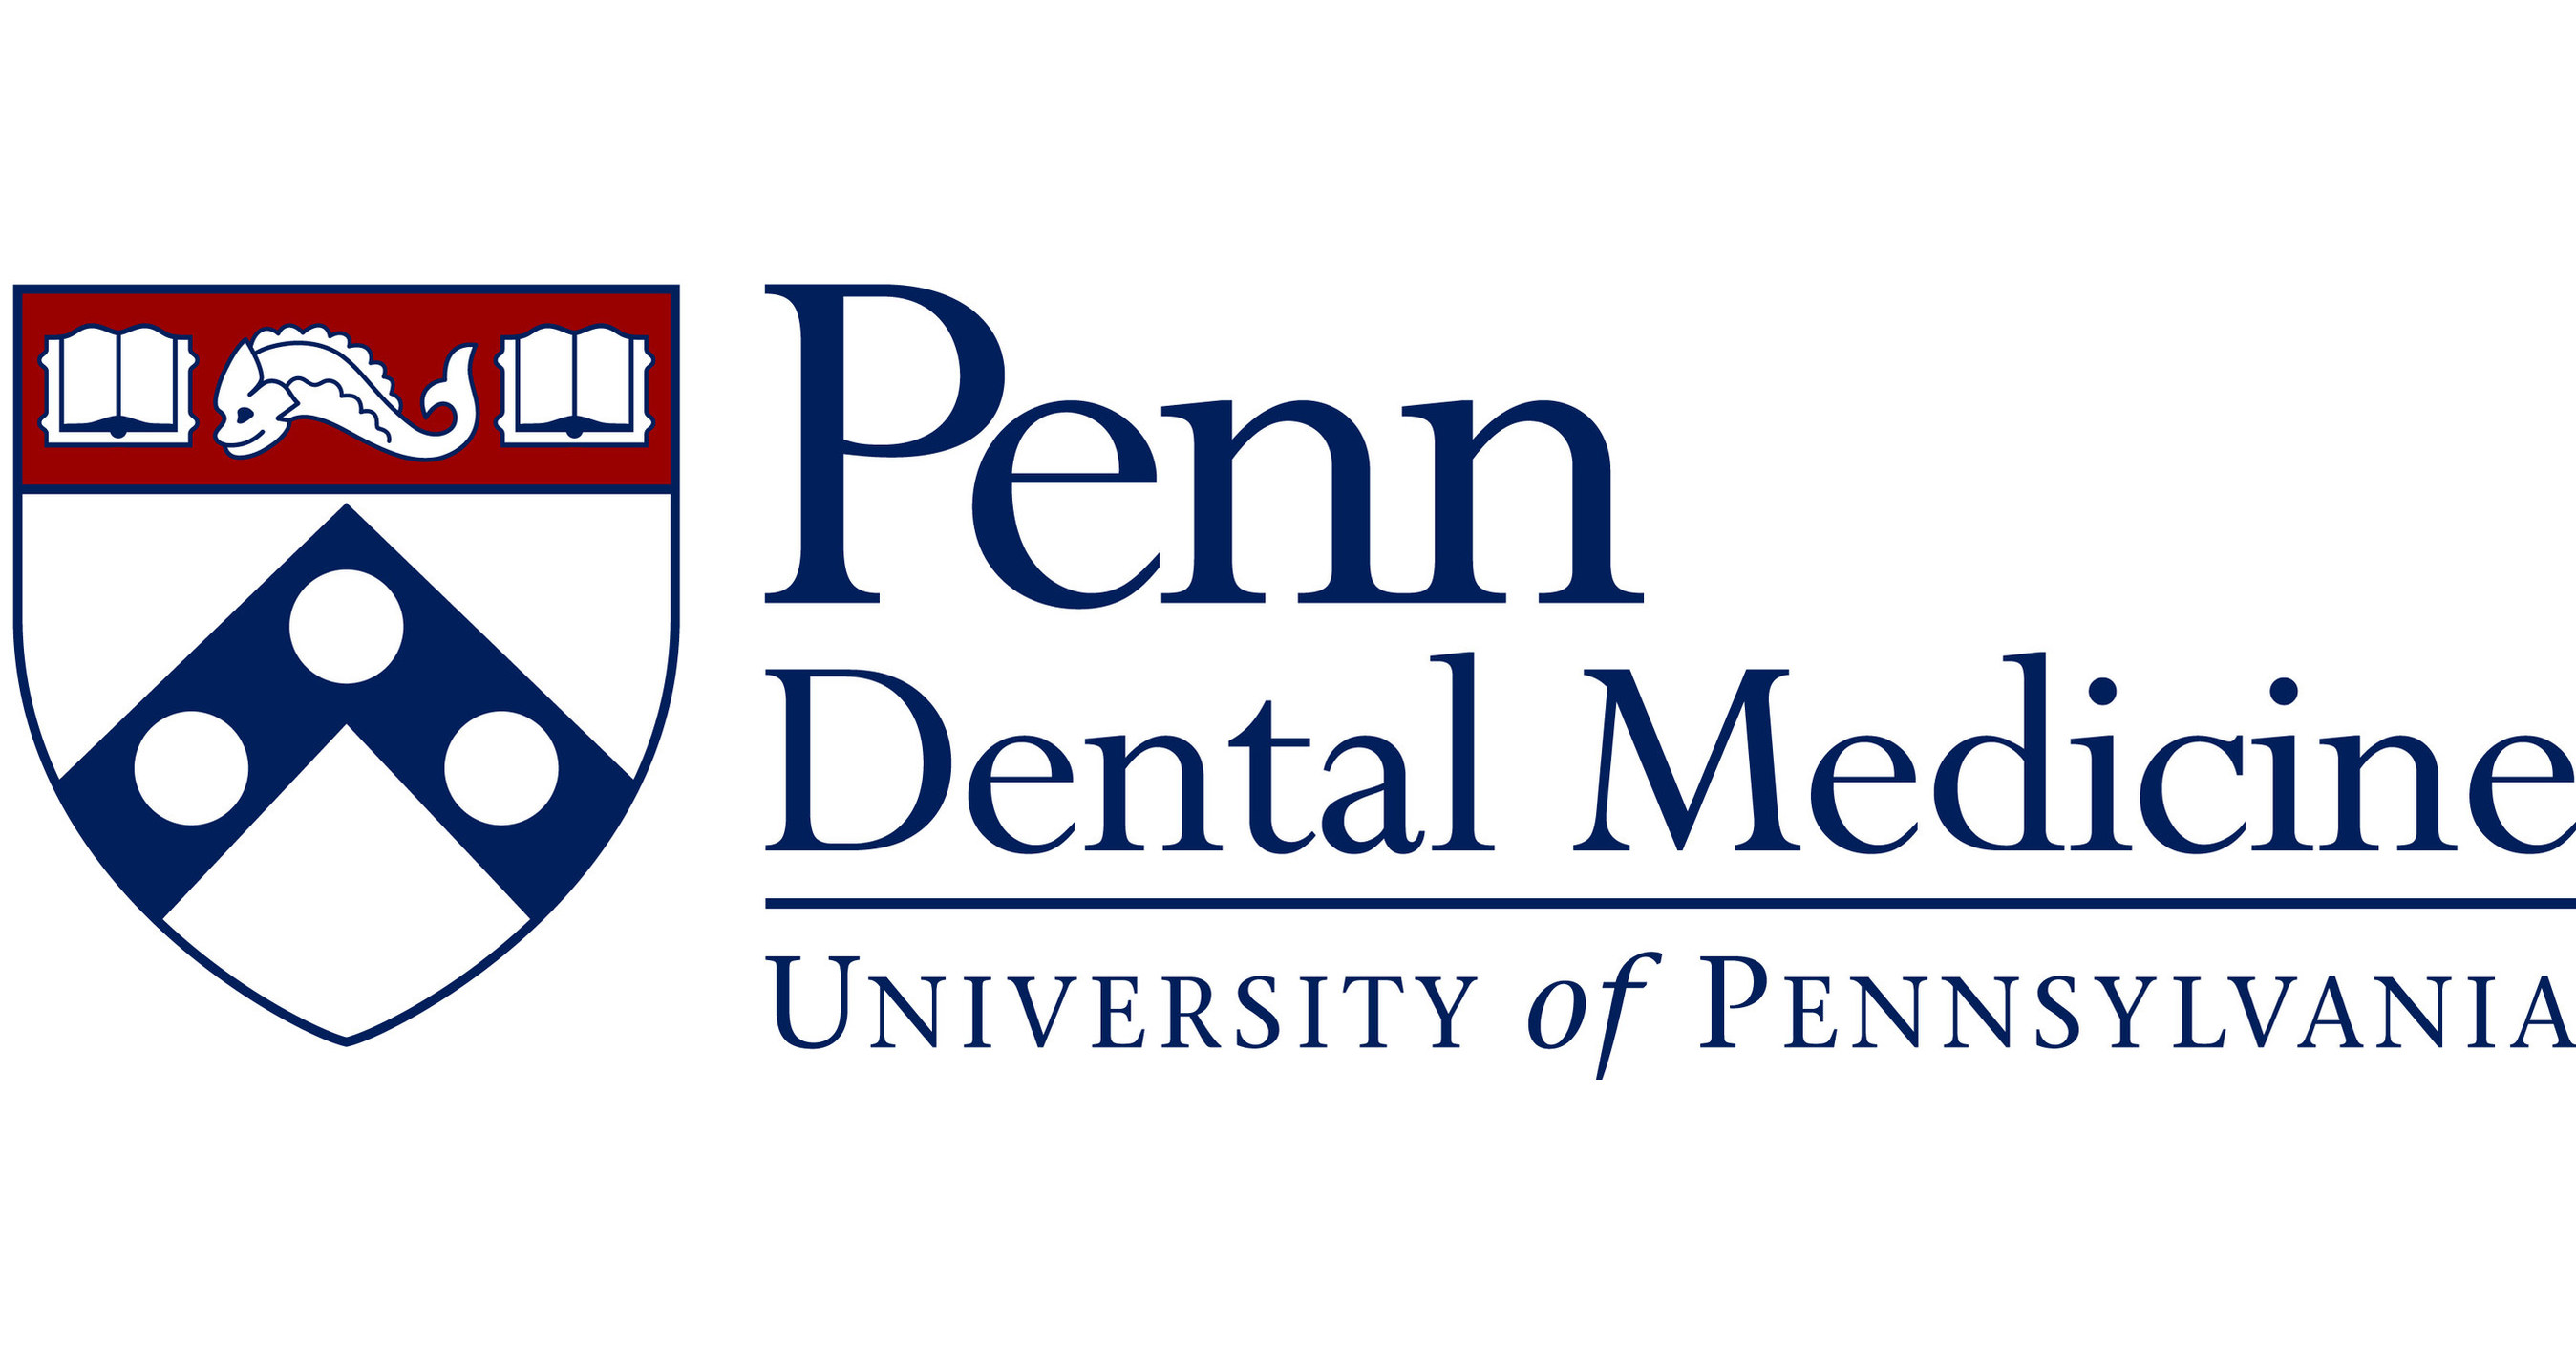 Penn Dental